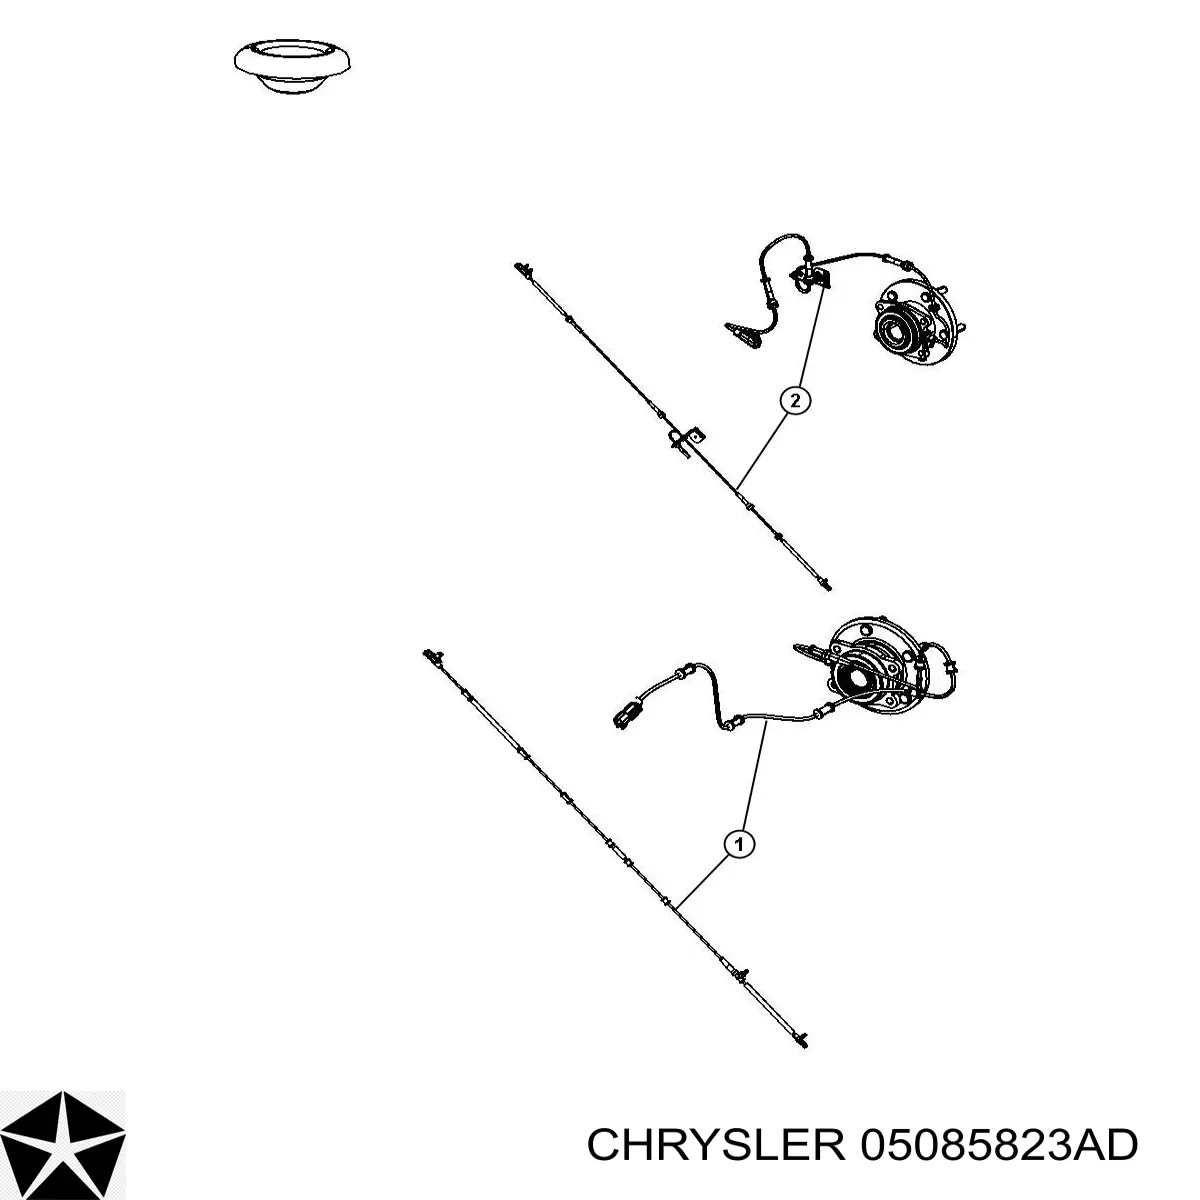 05085823AD Chrysler датчик абс (abs передний левый)